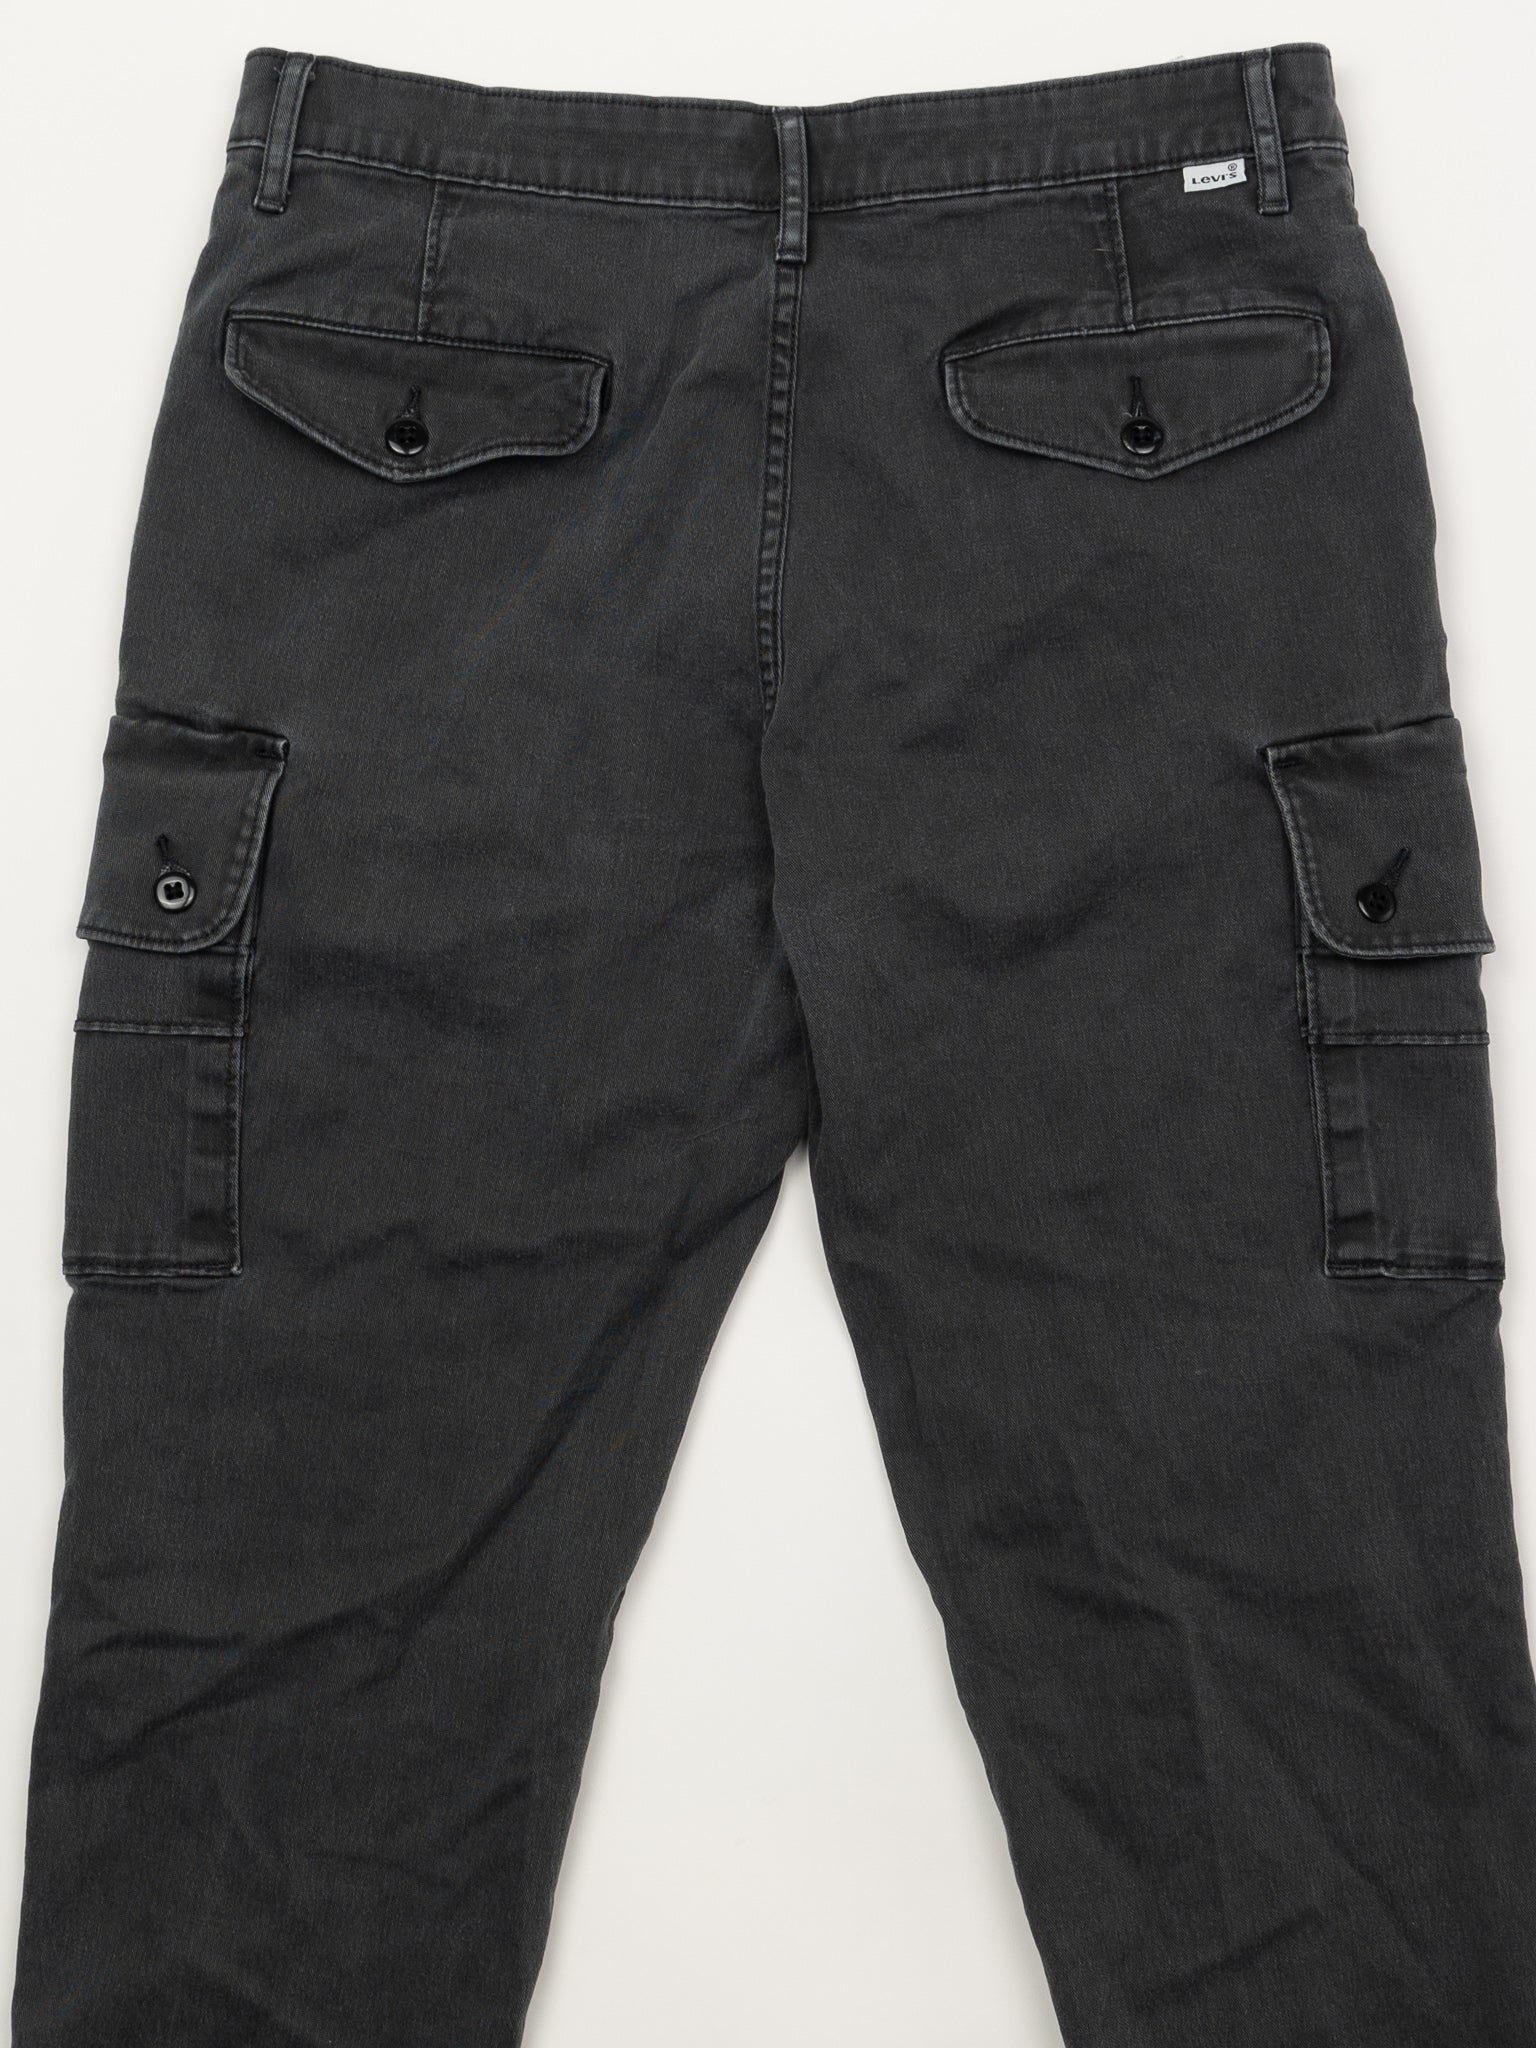 Vintage Washed Black Levi Cargo Pants (33 x 34)